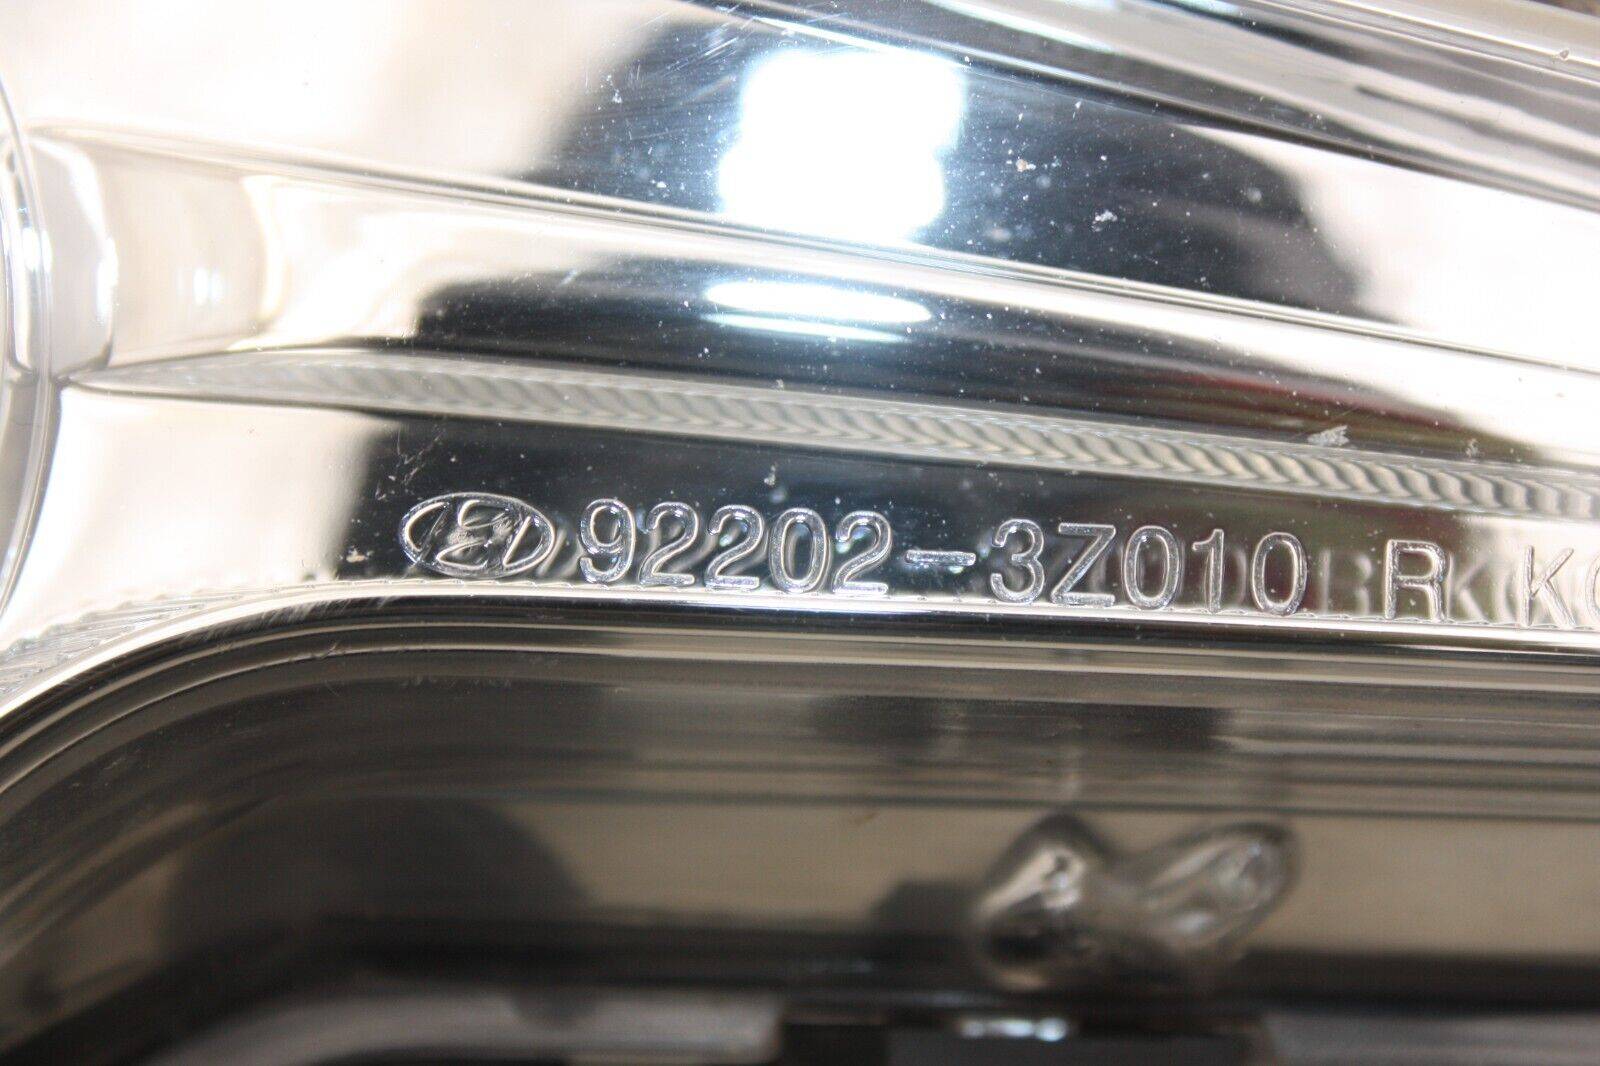 Hyundai-i40-Front-Bumper-Right-Side-Fog-Light-2011-to-2015-92202-3Z010-Genuine-175665538242-2